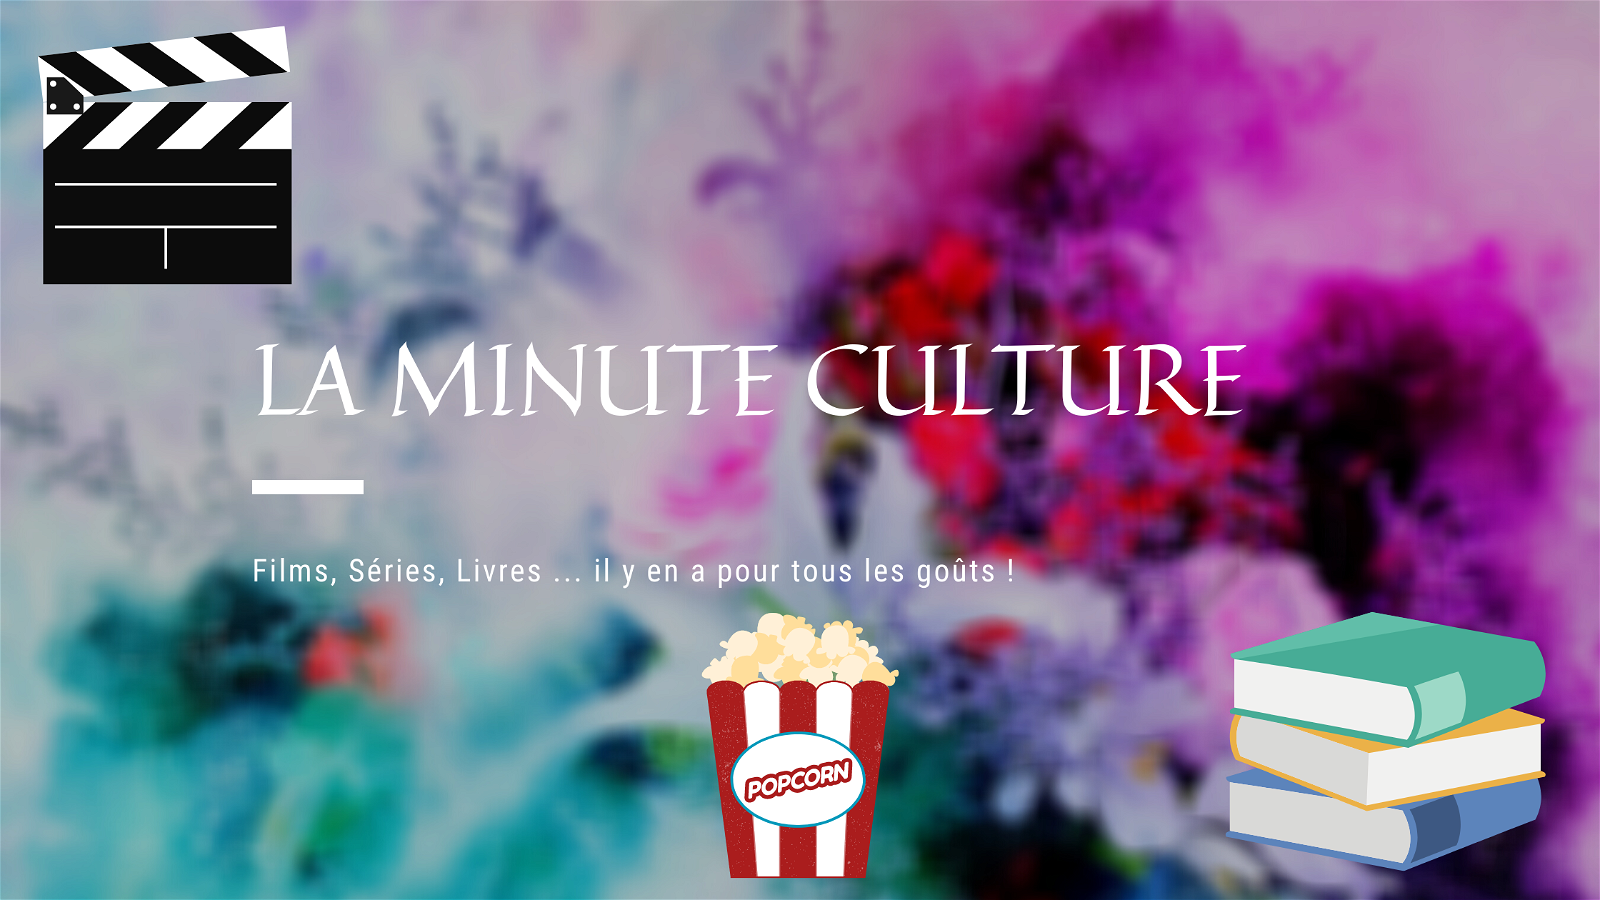 La minute culture - épisode 5